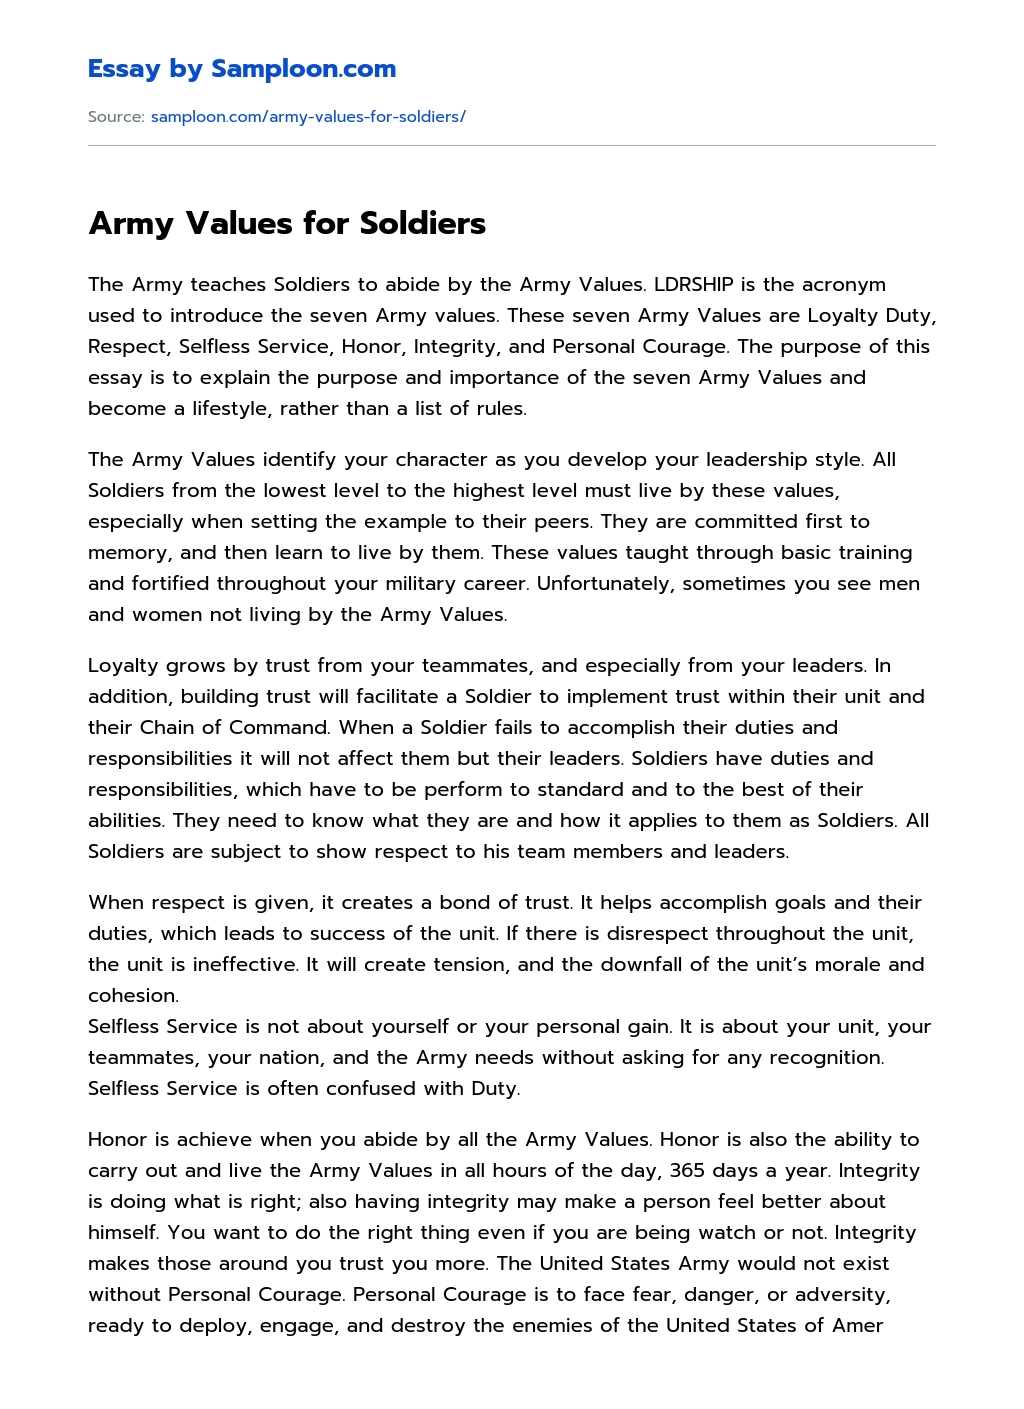 blc informative essay army values